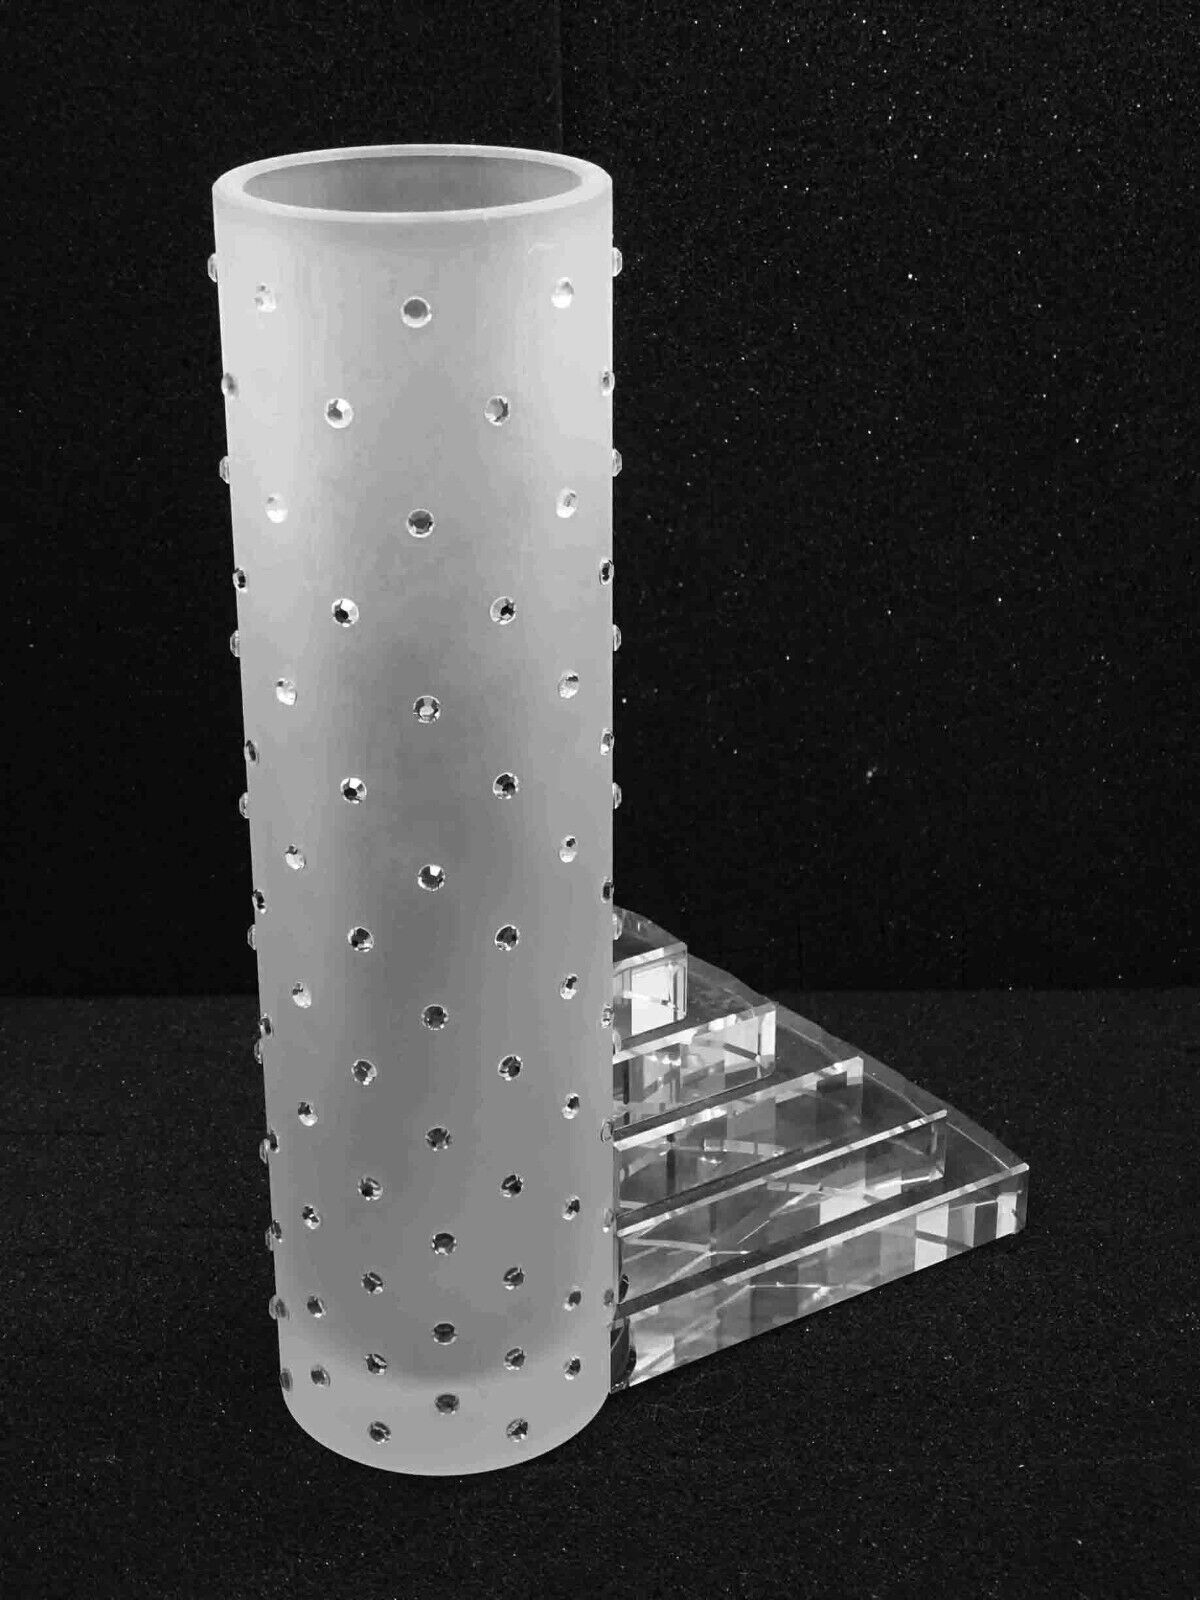 Swarovski Crystal Toh Vase #238228 w/Original Box